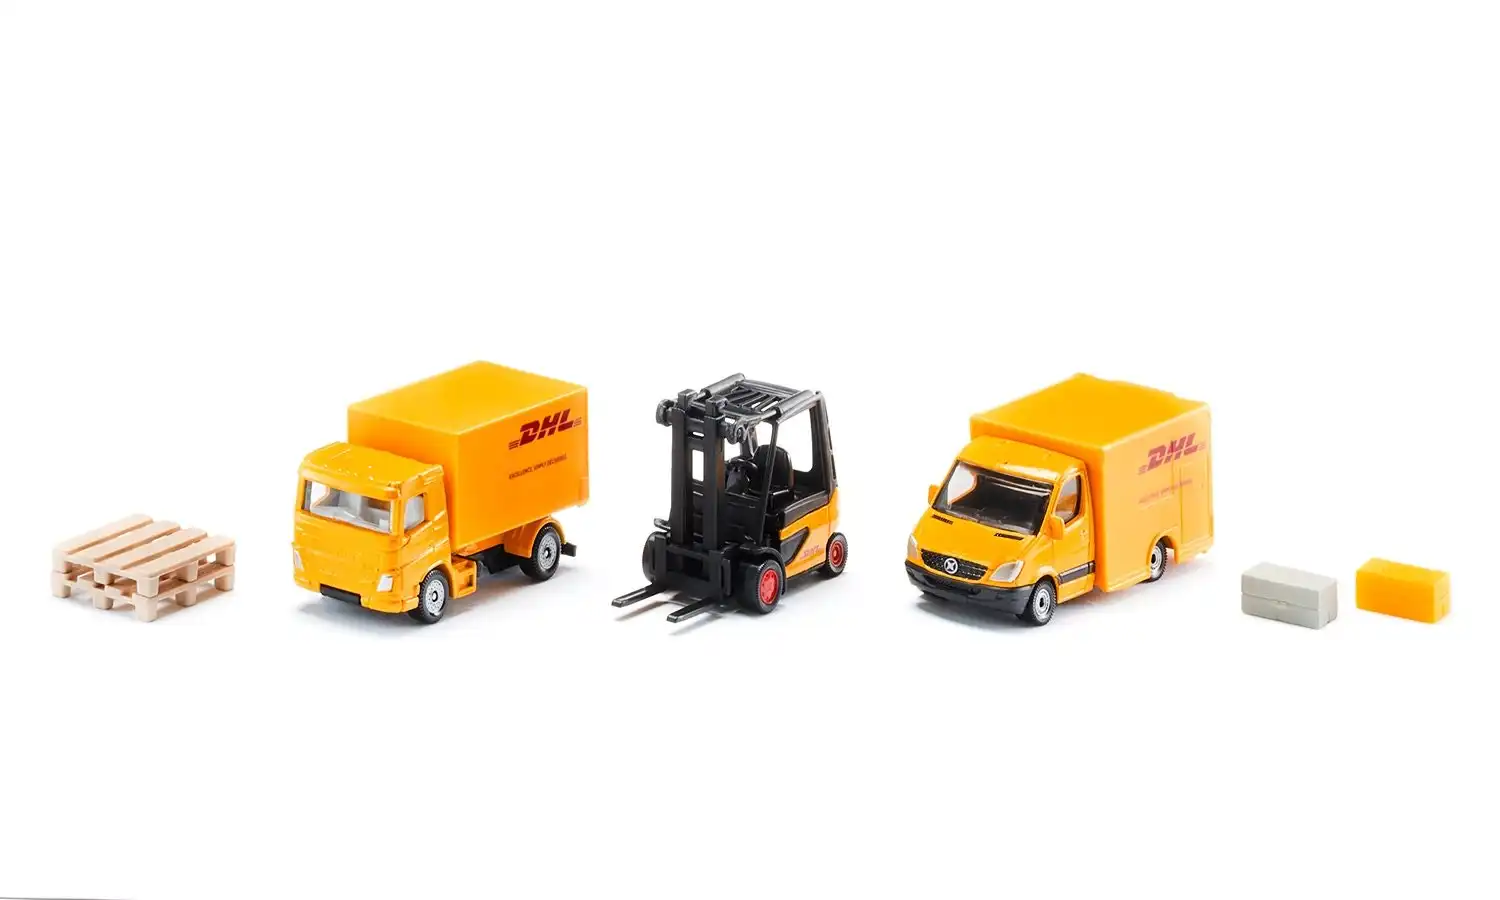 Siku - DHL Logistics 3 Vehicle And Accessories Playset